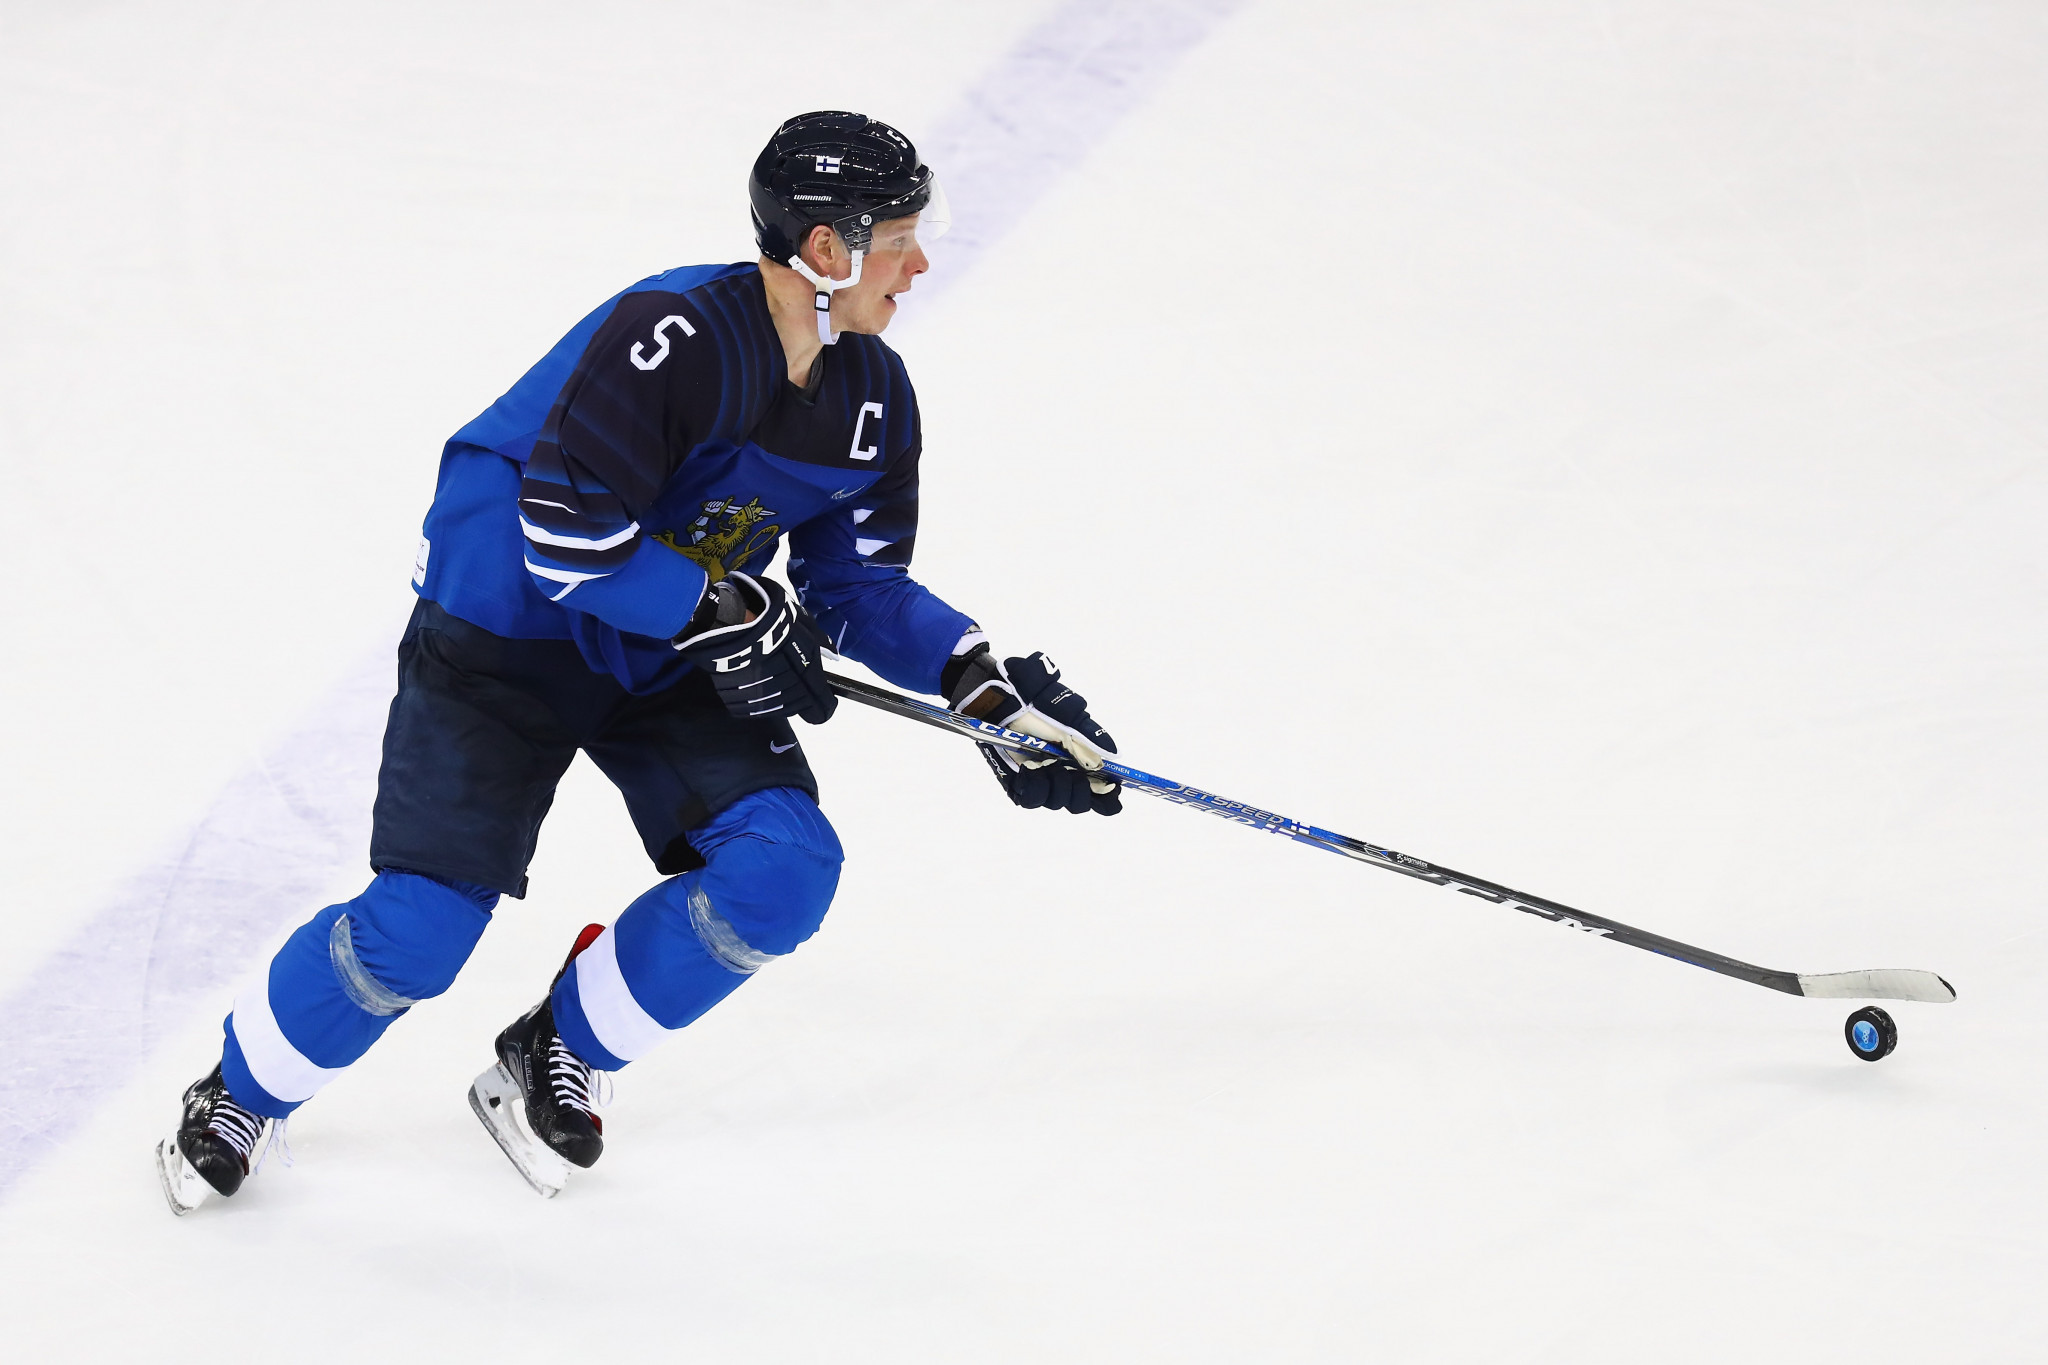 Finland's triple Olympic medallist Kukkonen announces ice hockey retirement